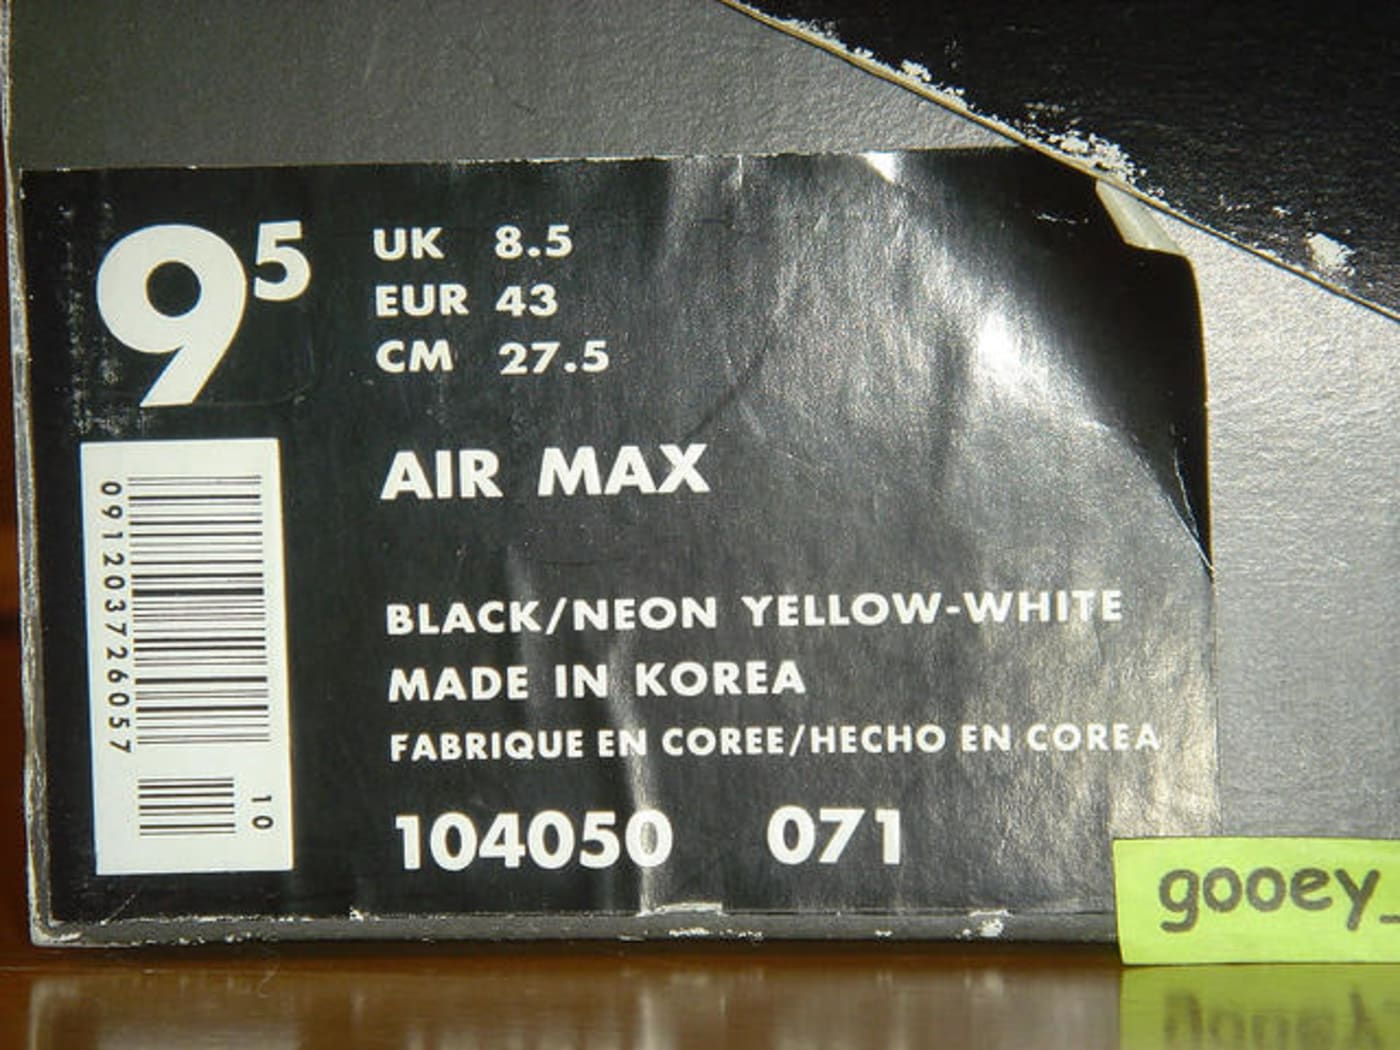 Air Max 95 box